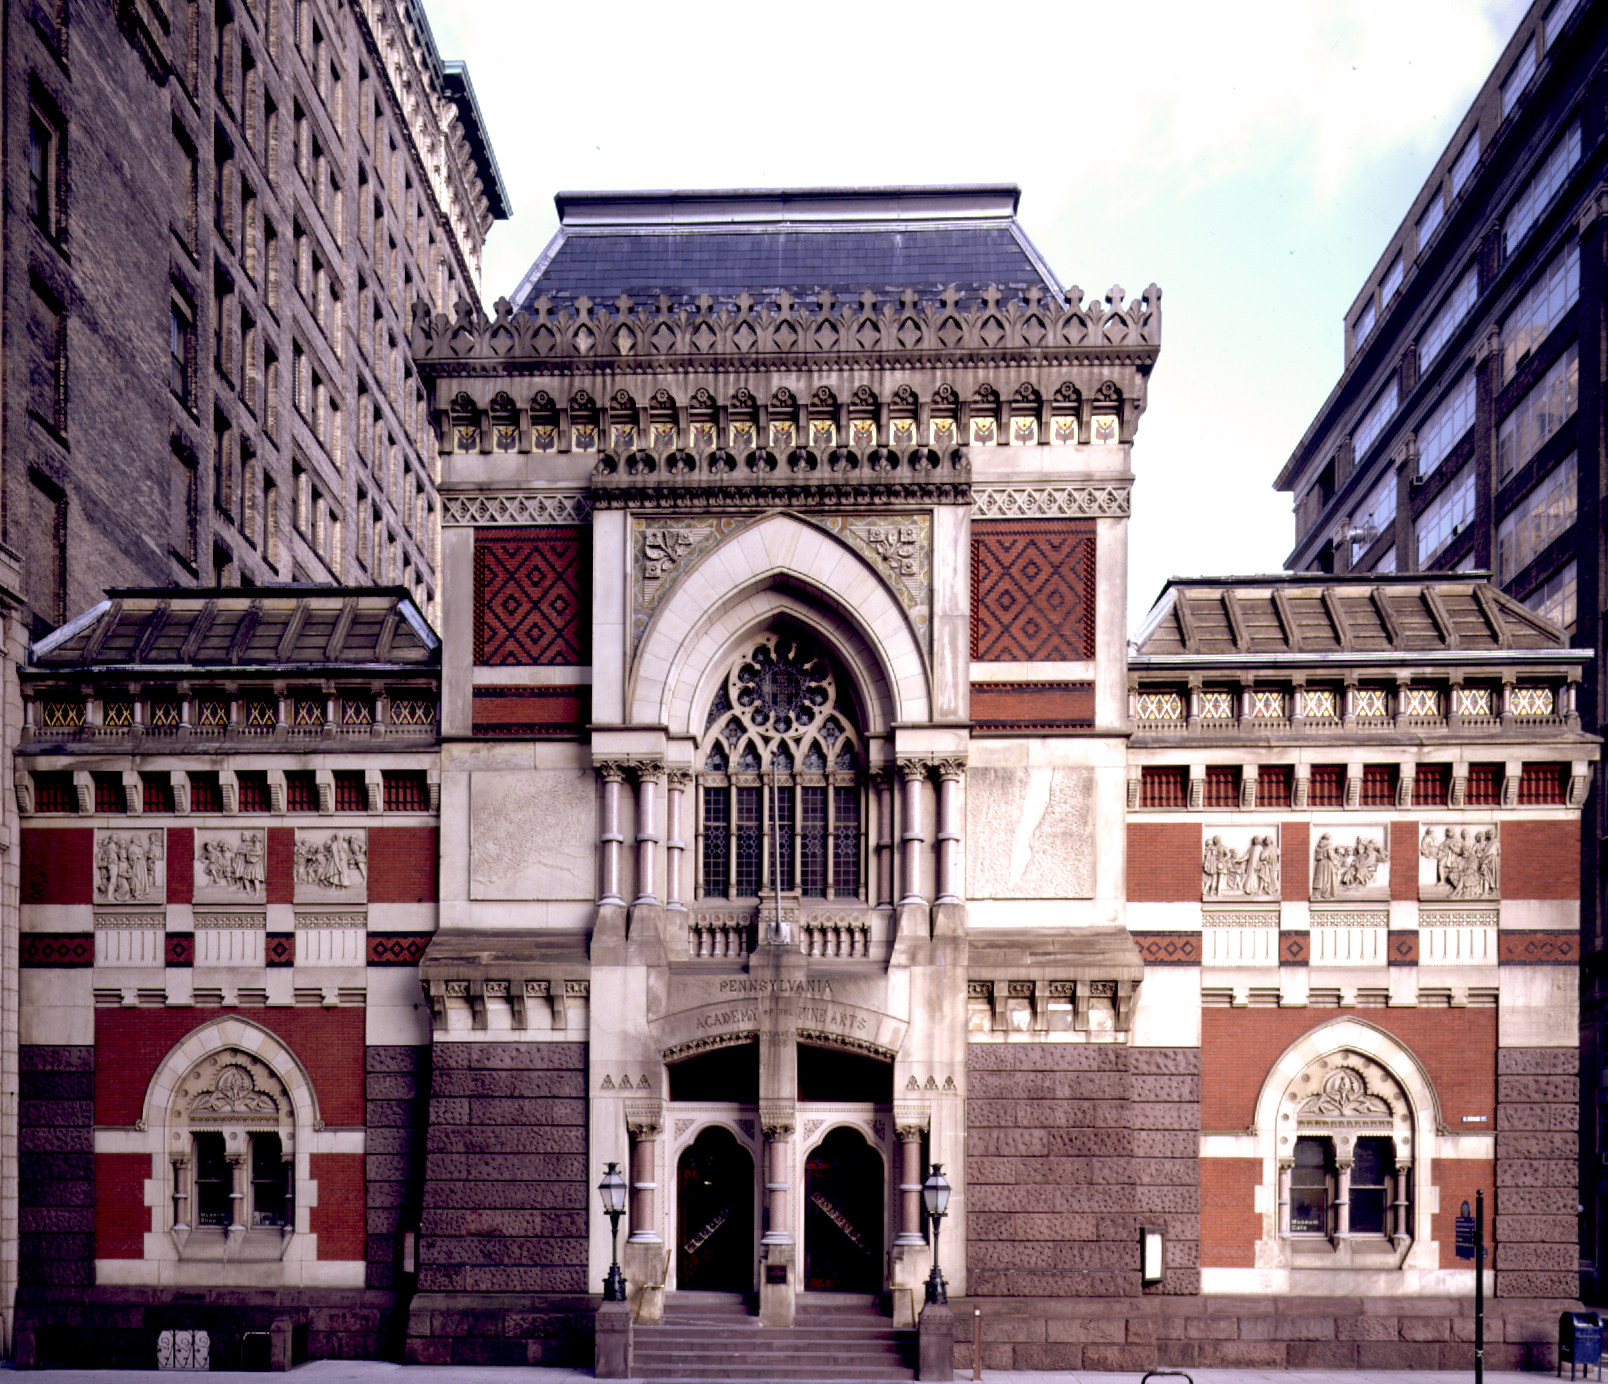 exterior of historic landmark building